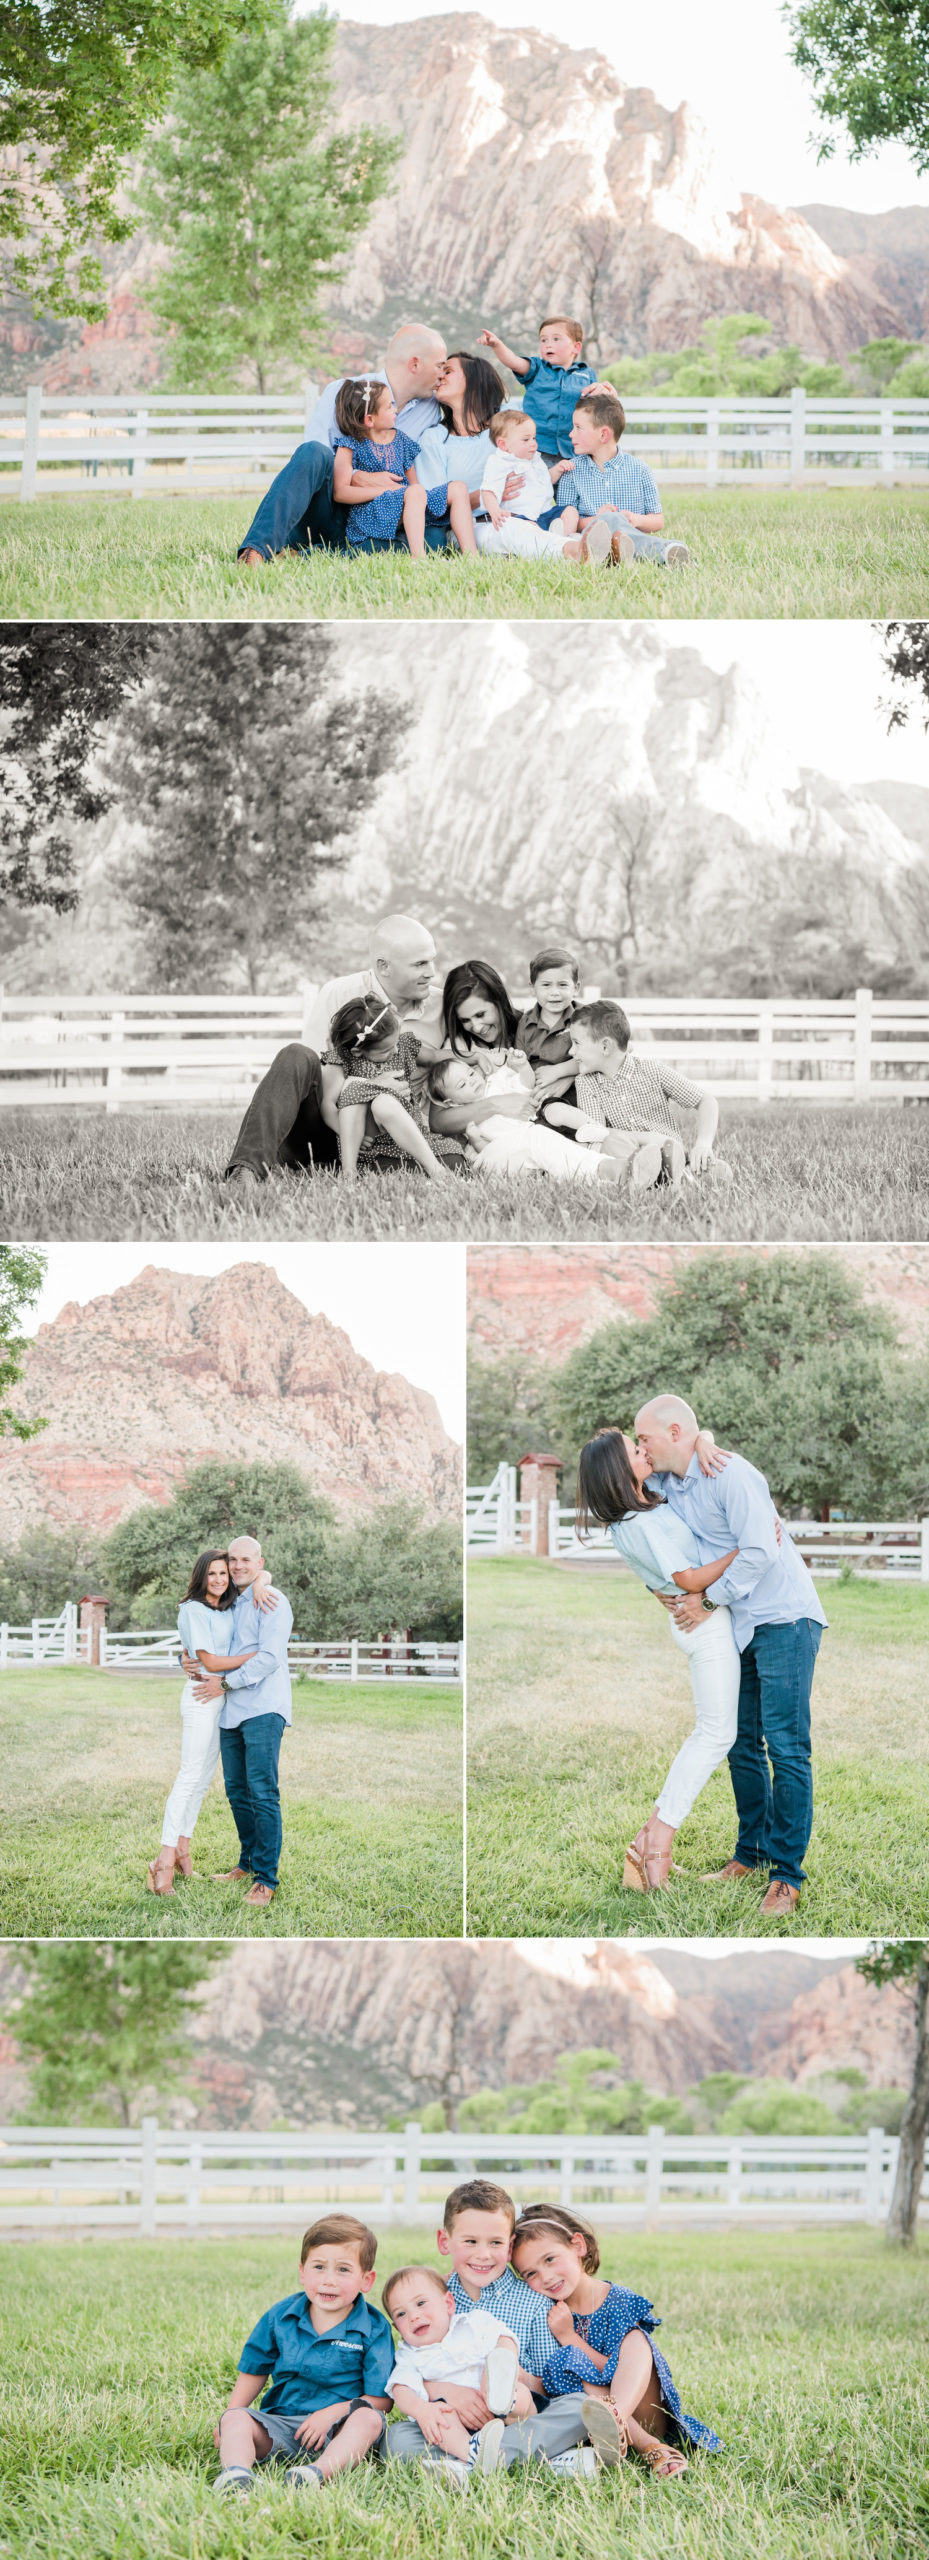 Spring Mountain Ranch Family Photoshoot | Kristen Marie Weddings + Portraits | Las Vegas Family Photographer